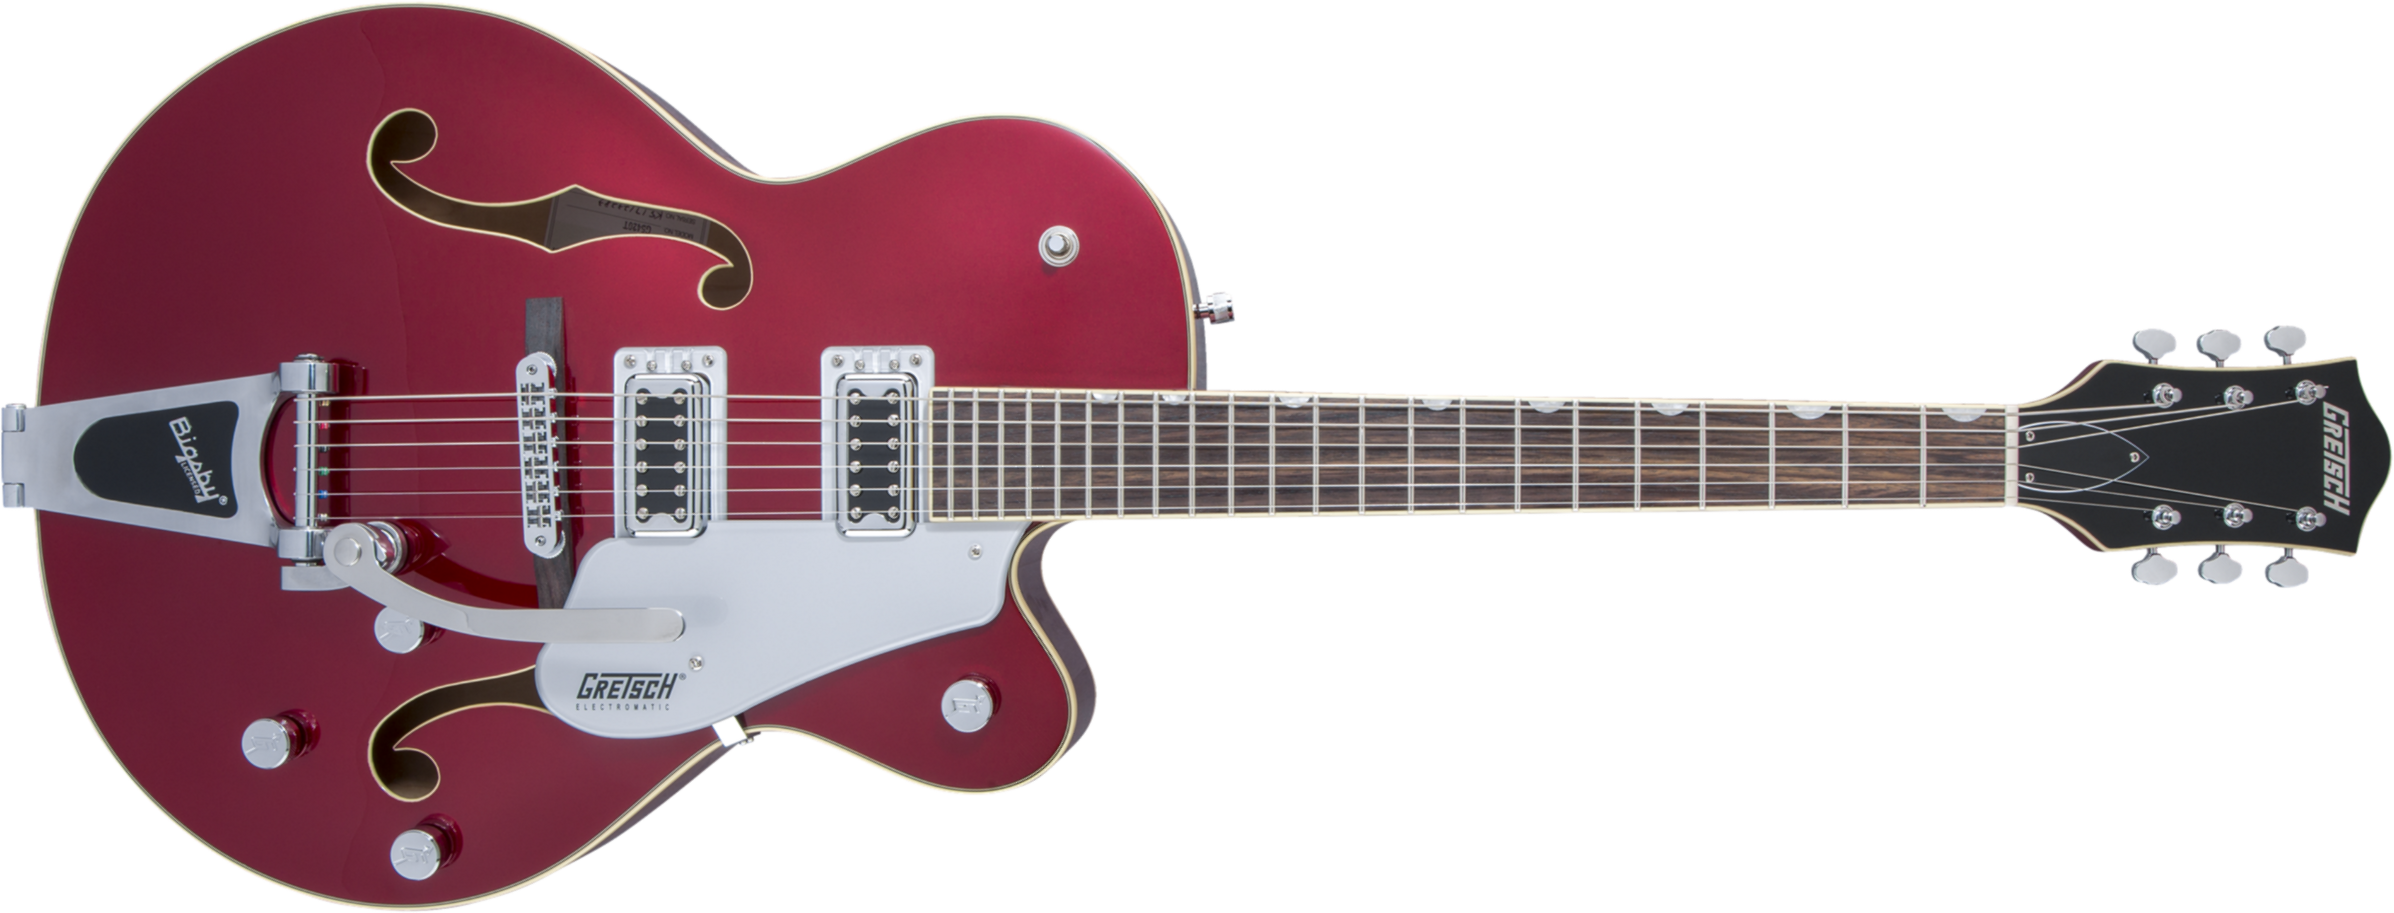 Gretsch G5420t Electromatic Hollow Body 2018 - Candy Apple Red - Semi hollow elektriche gitaar - Main picture